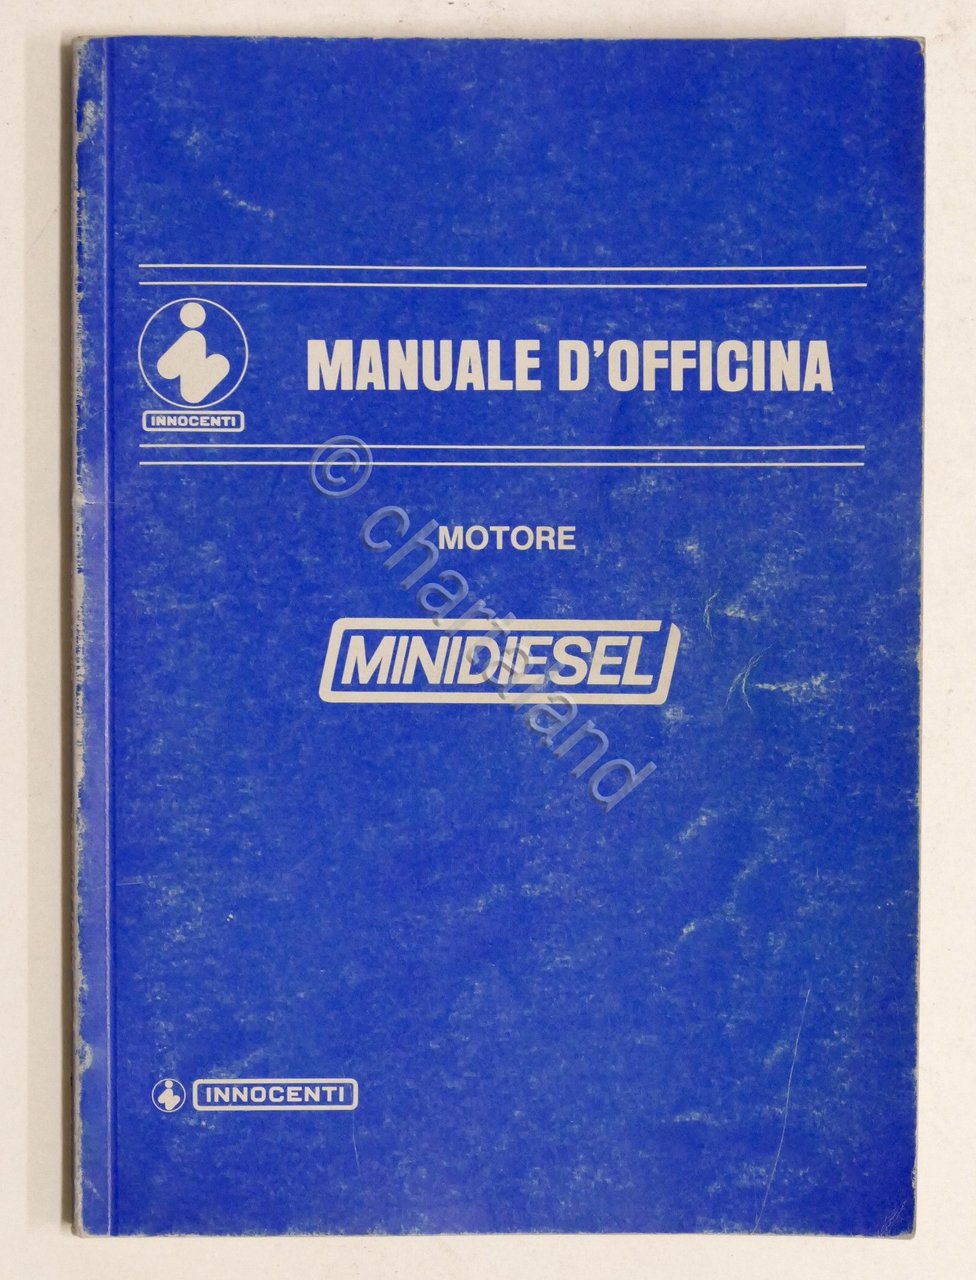 Innocenti - Manuale d'Officina Motore Minidiesel - ed. 1985